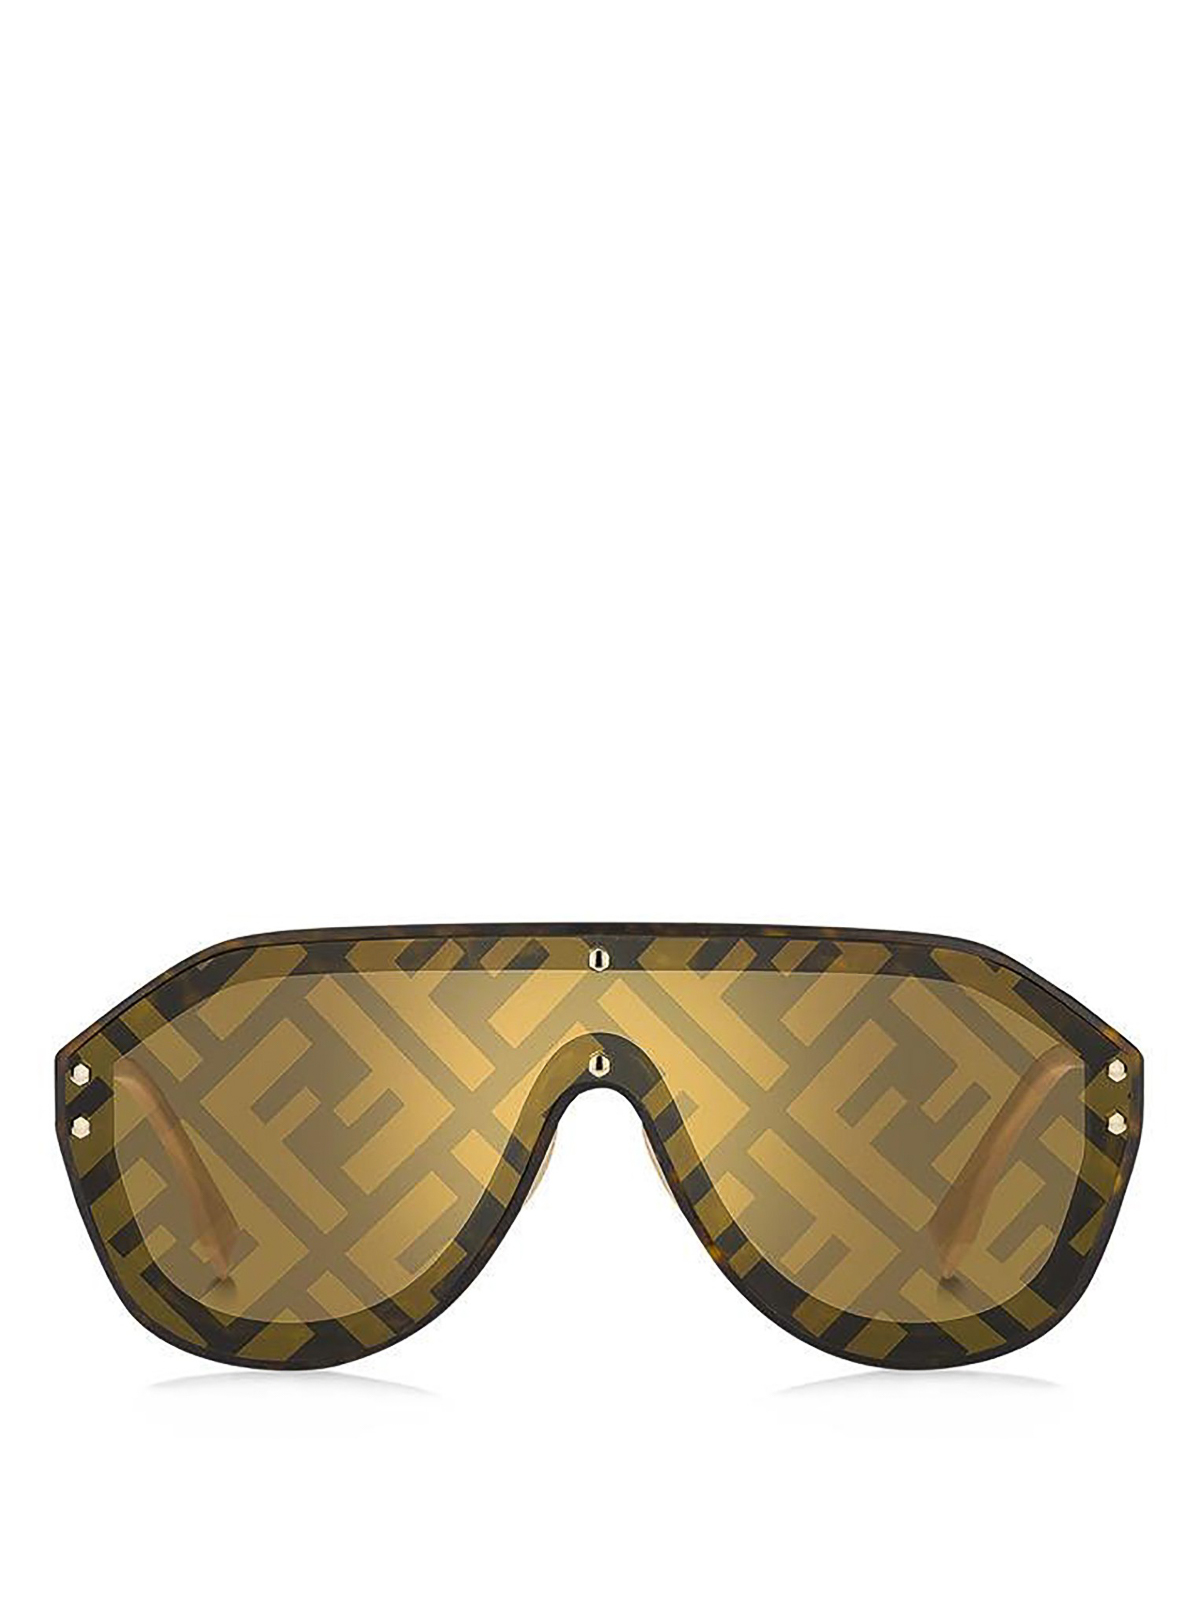 Sunglasses Fendi - Aviator sunglasses - FFM0039GSXLT7YHAVANABEIGE